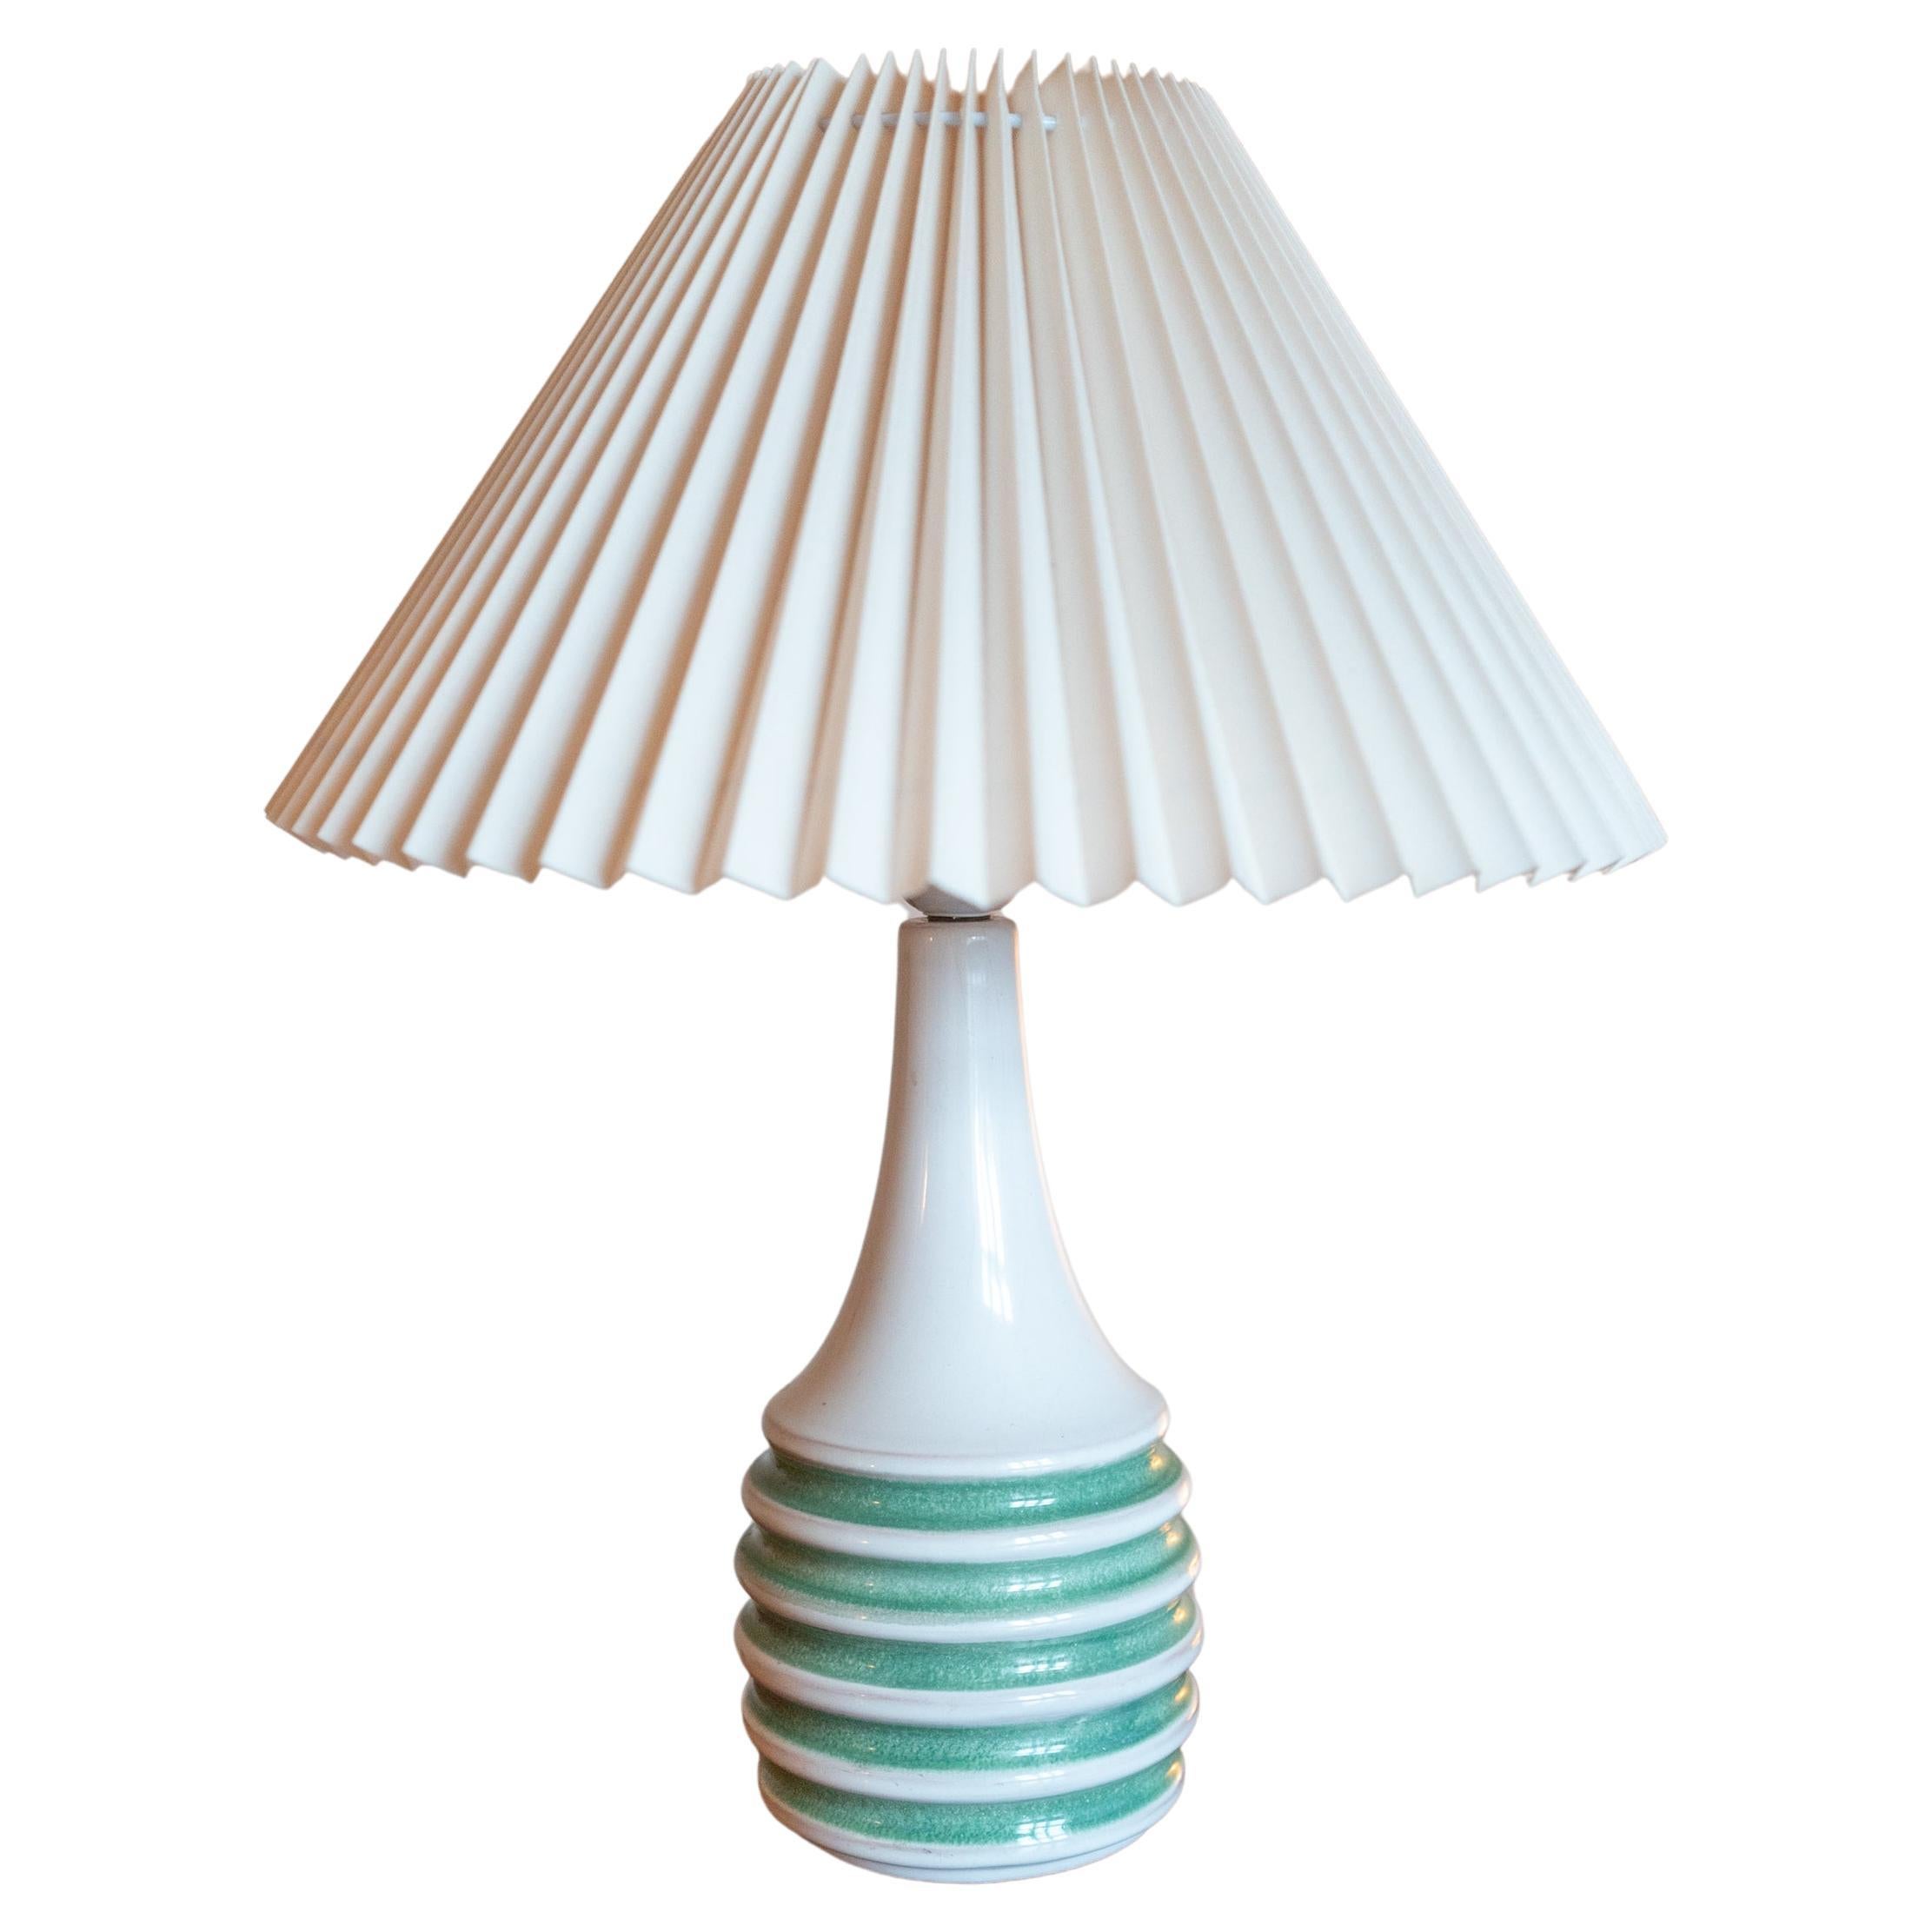 Michael Andersen & Son, Ceramic Table Lamp, Denmark, 1960s